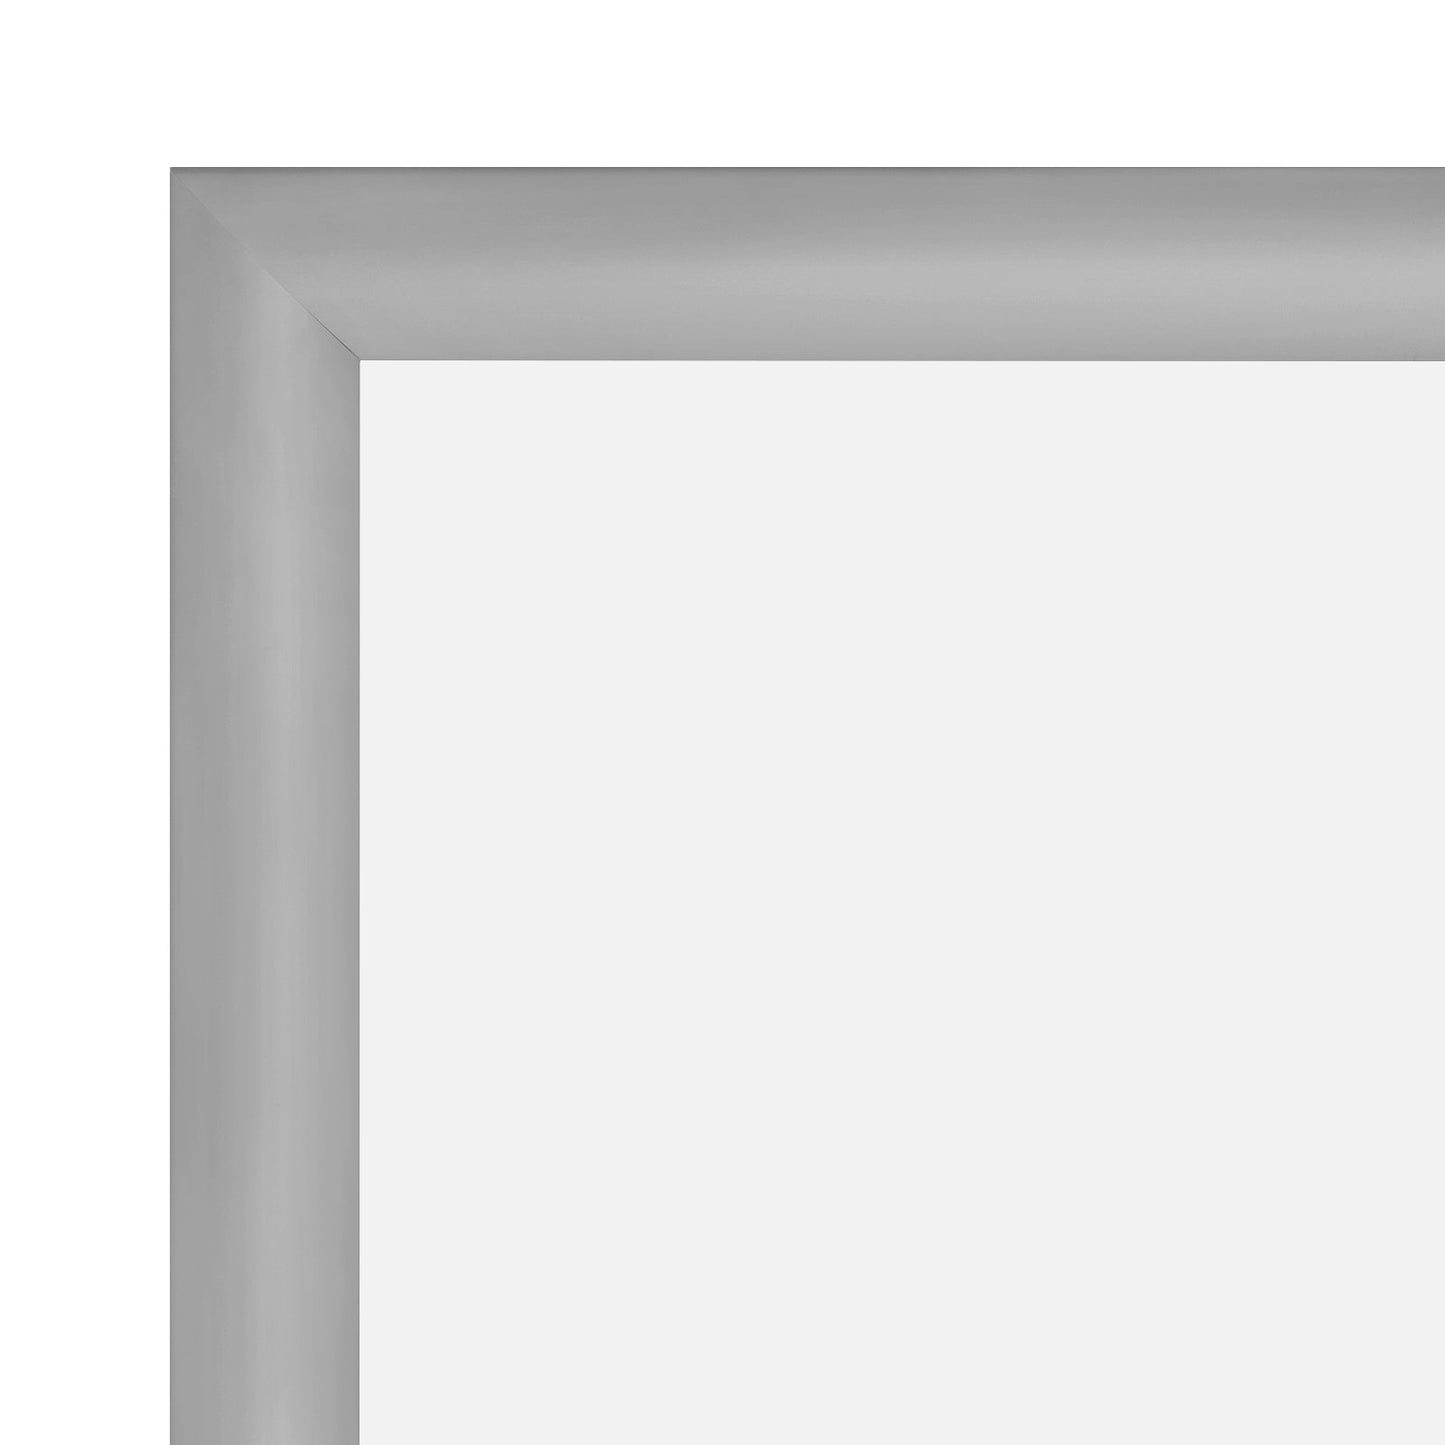 33x33 Silver SnapeZo® Snap Frame - 1.2" Profile